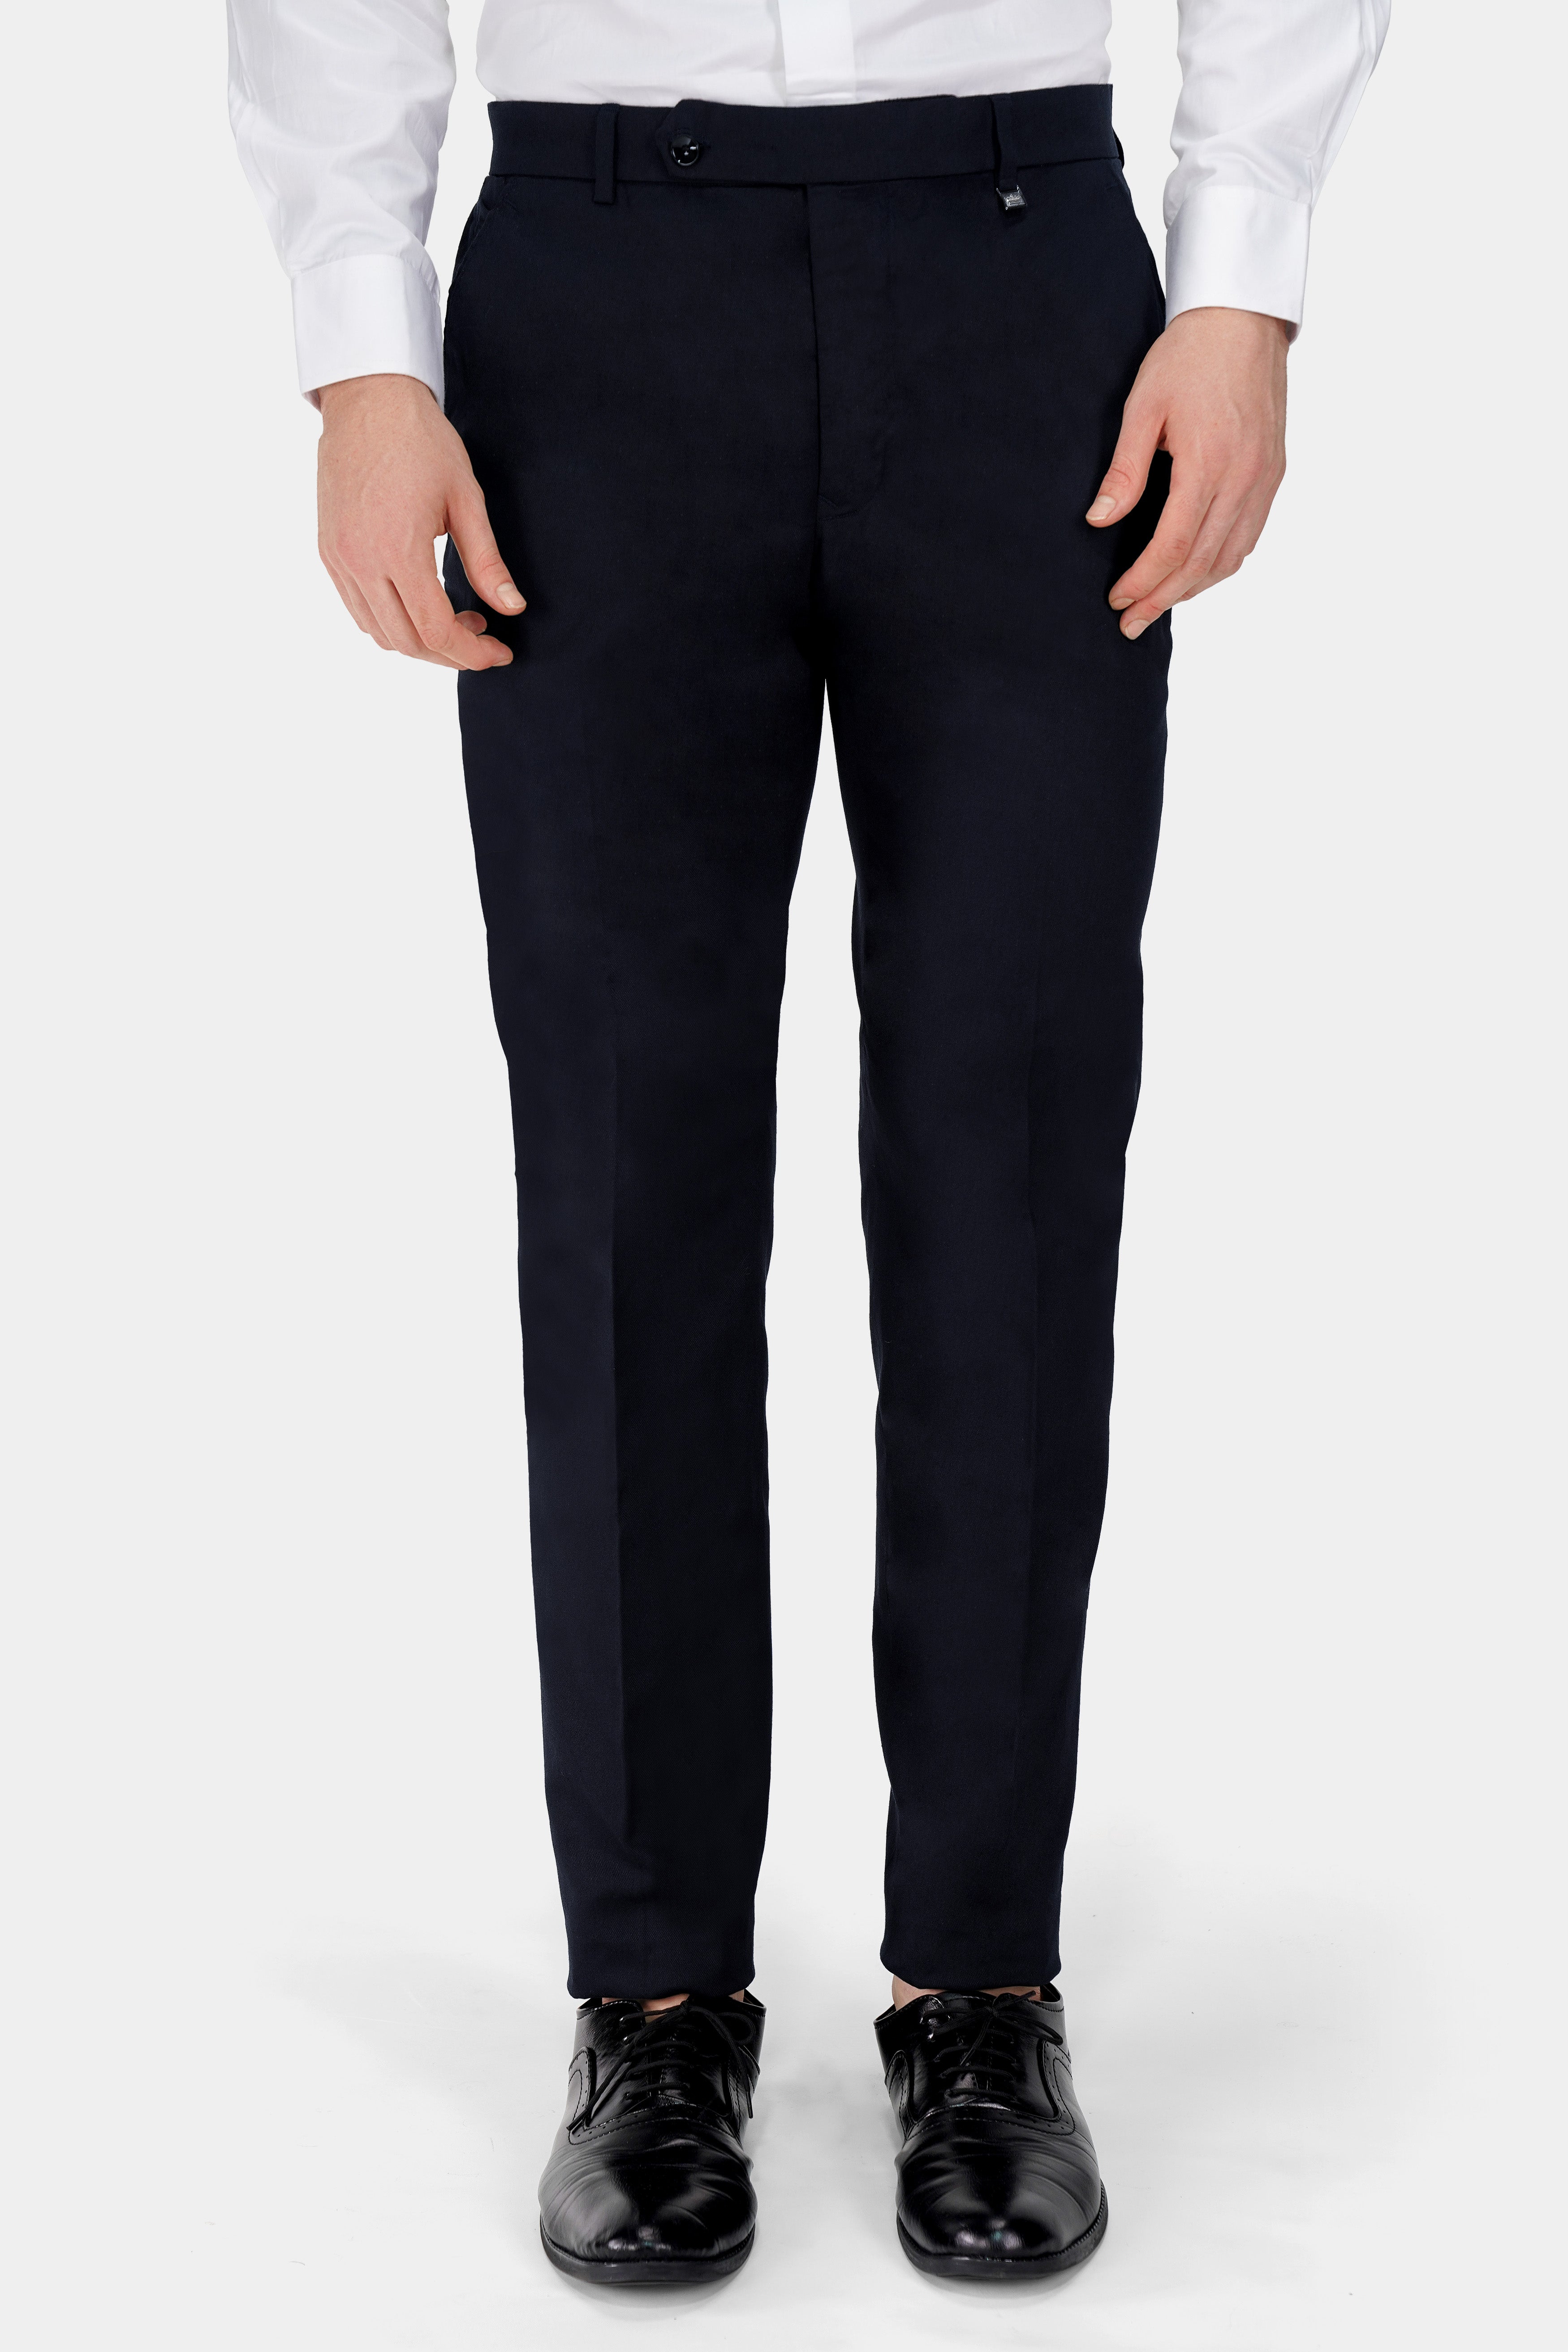 Buy Plus Size Women Formal Navy Blue Colour Pants (36) at